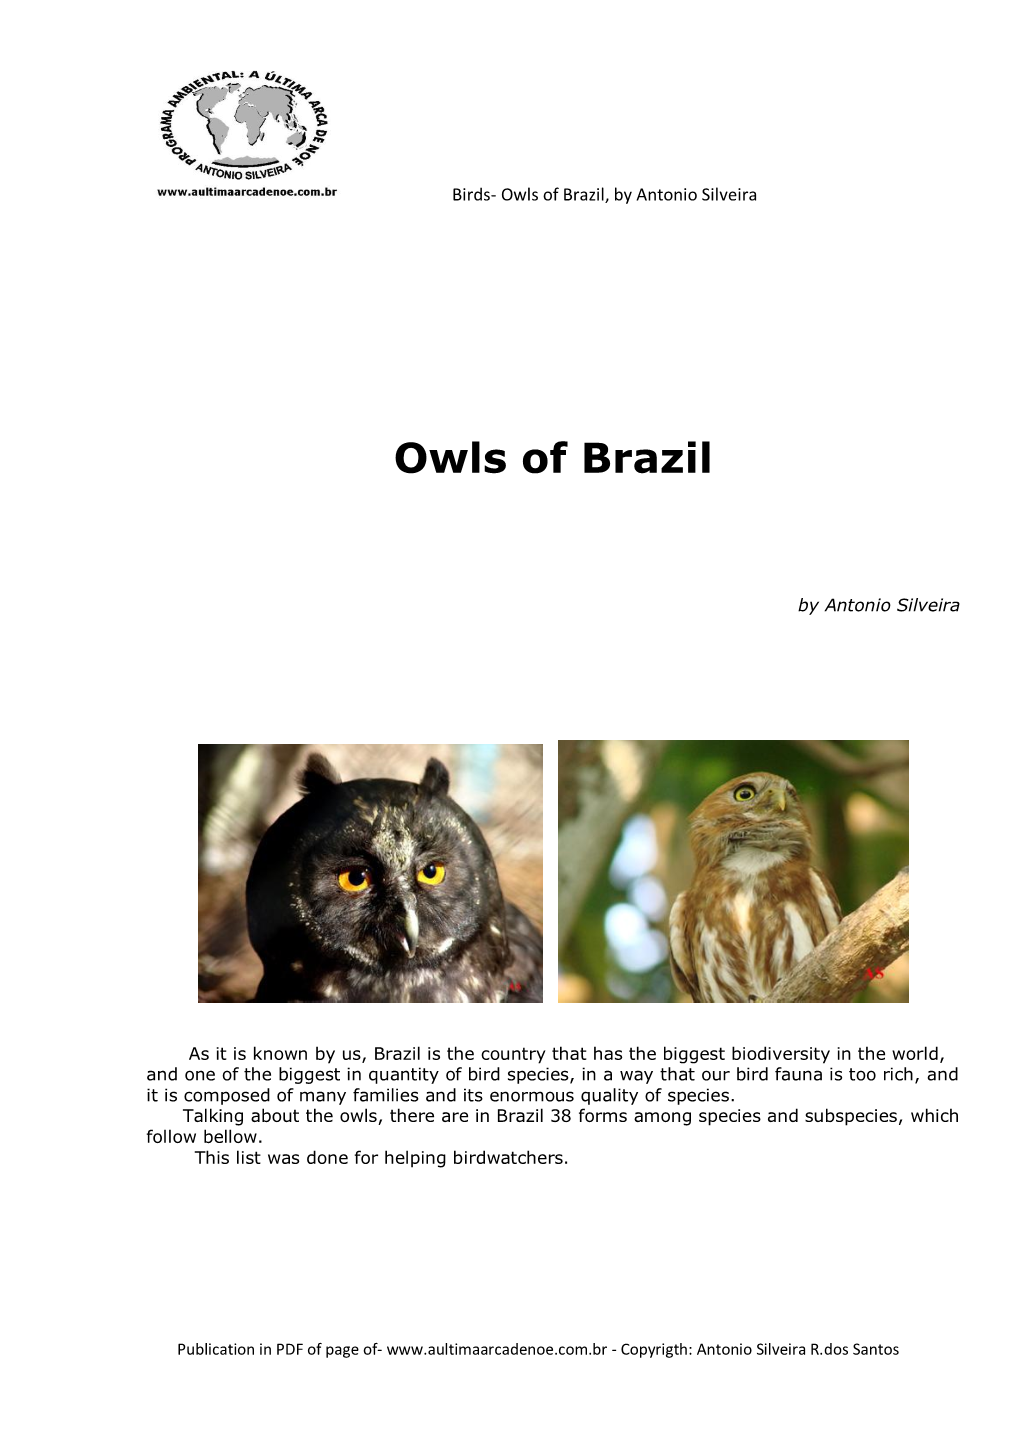 SANTOS, Antonio Silveira R. Owls of Brazil